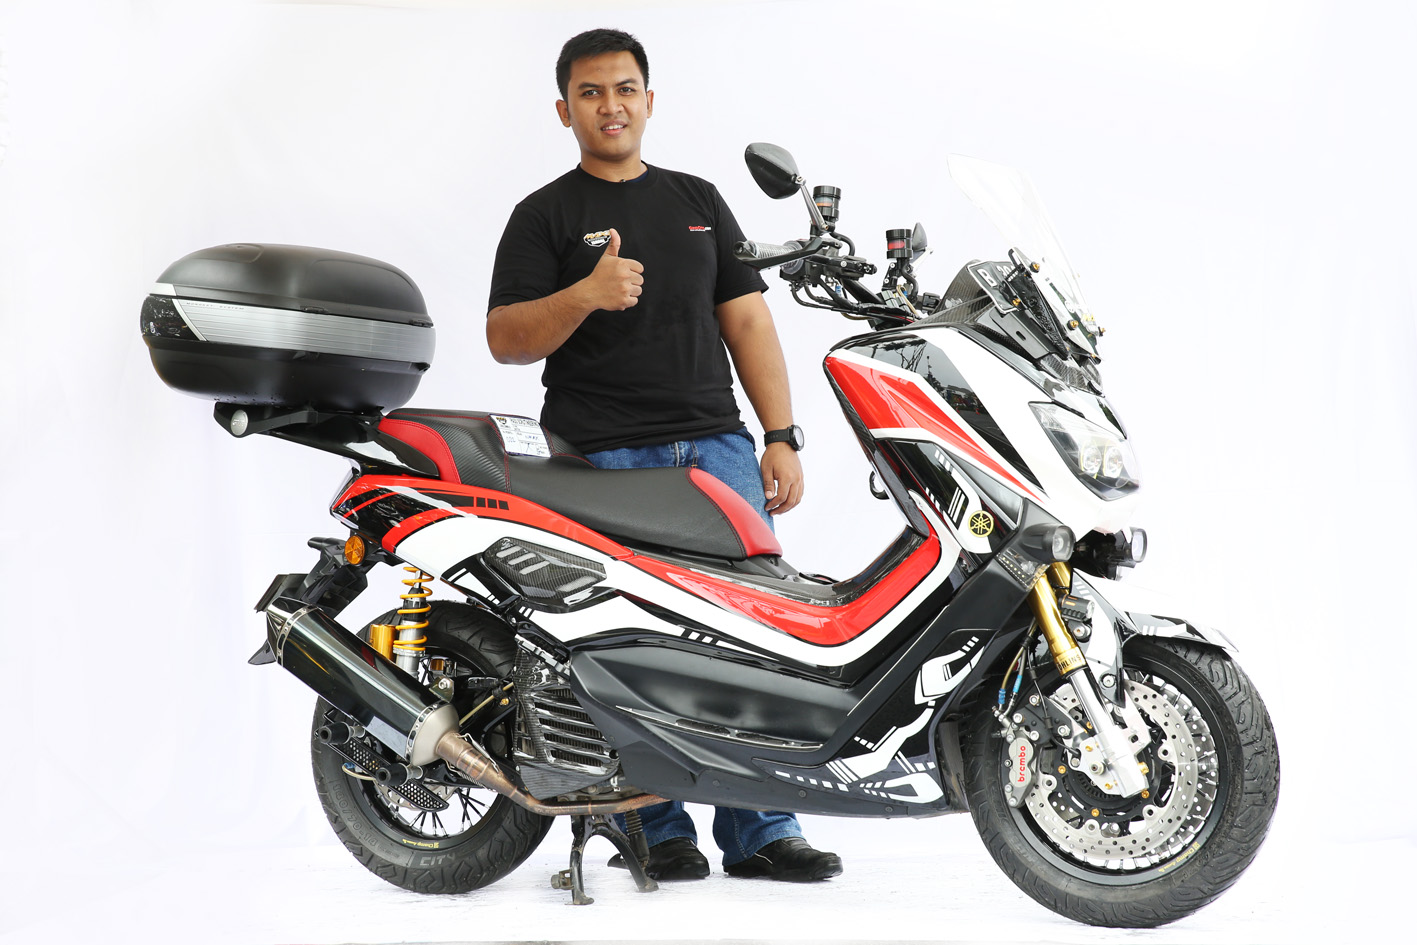 Cerita Para Juara Customaxi Yamaha Tangerang